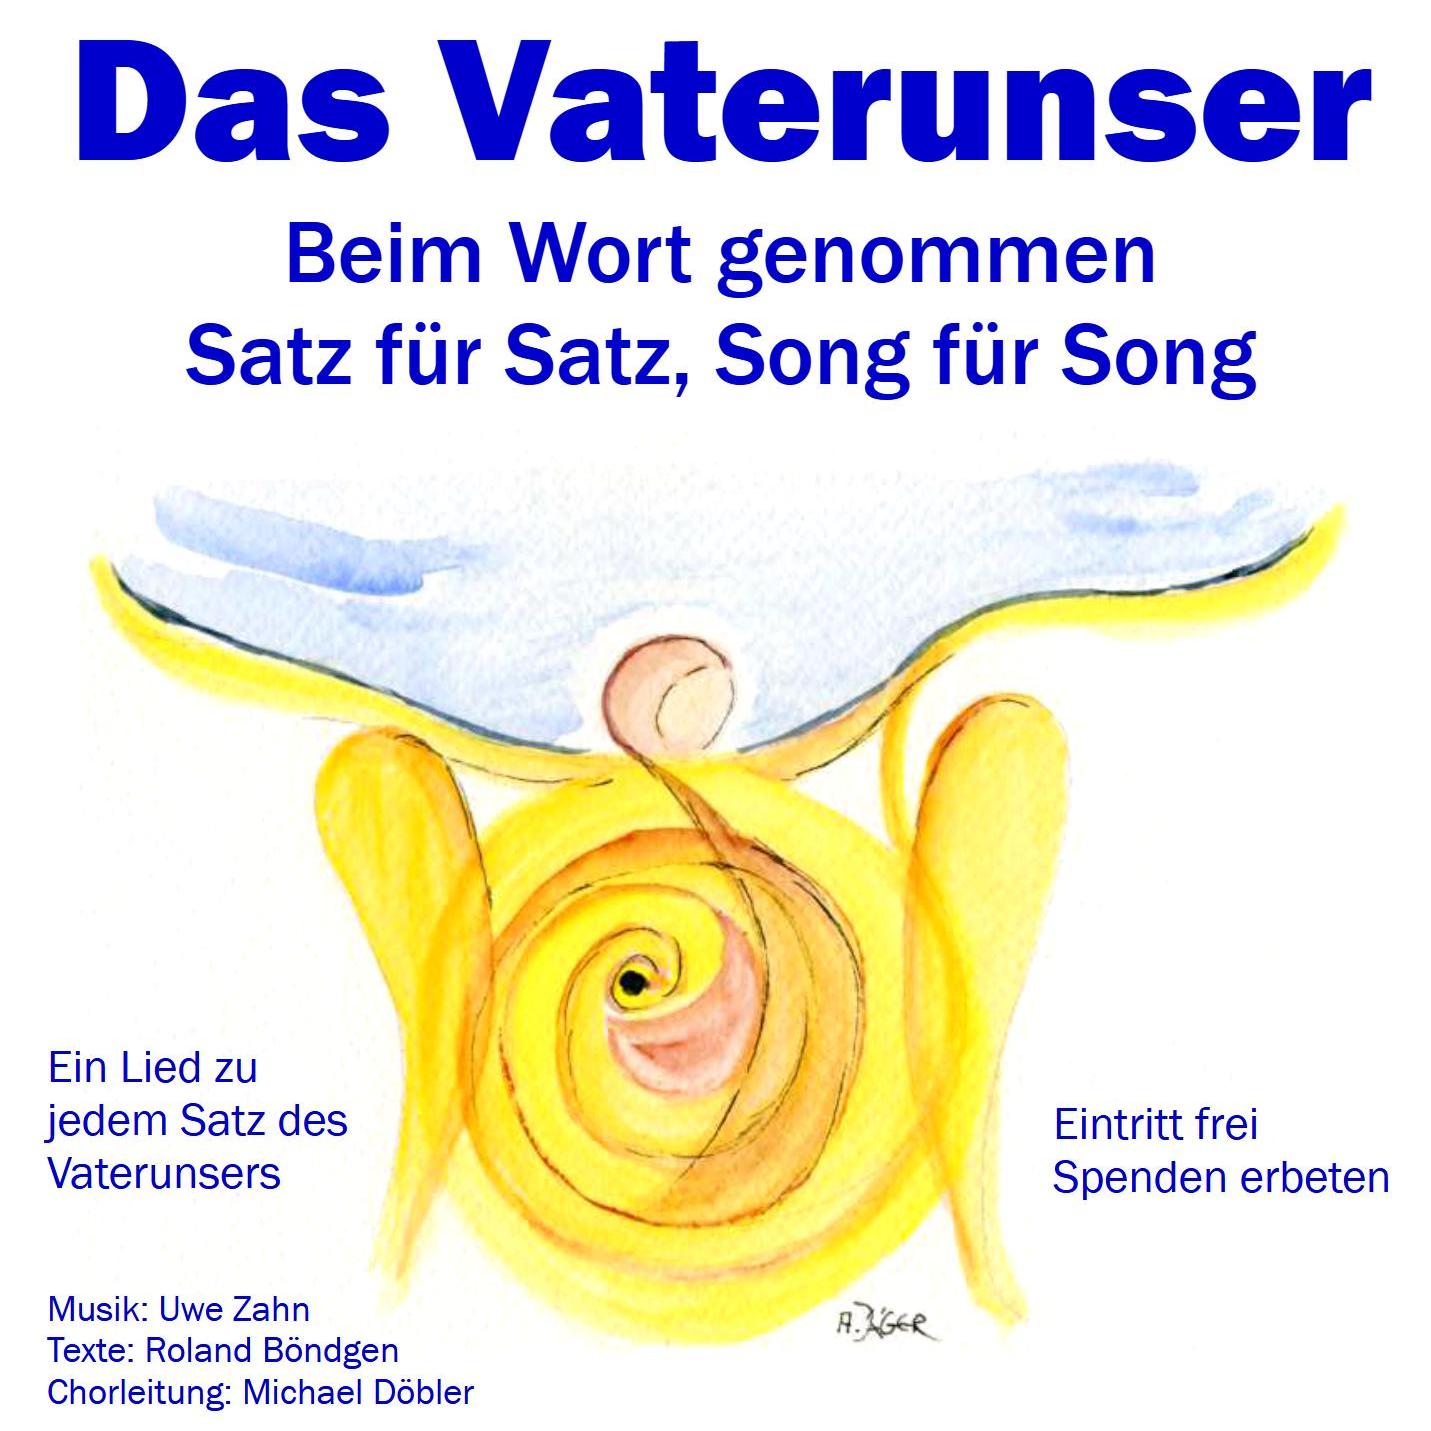 Vaterunser-Plakat-Babenhausen